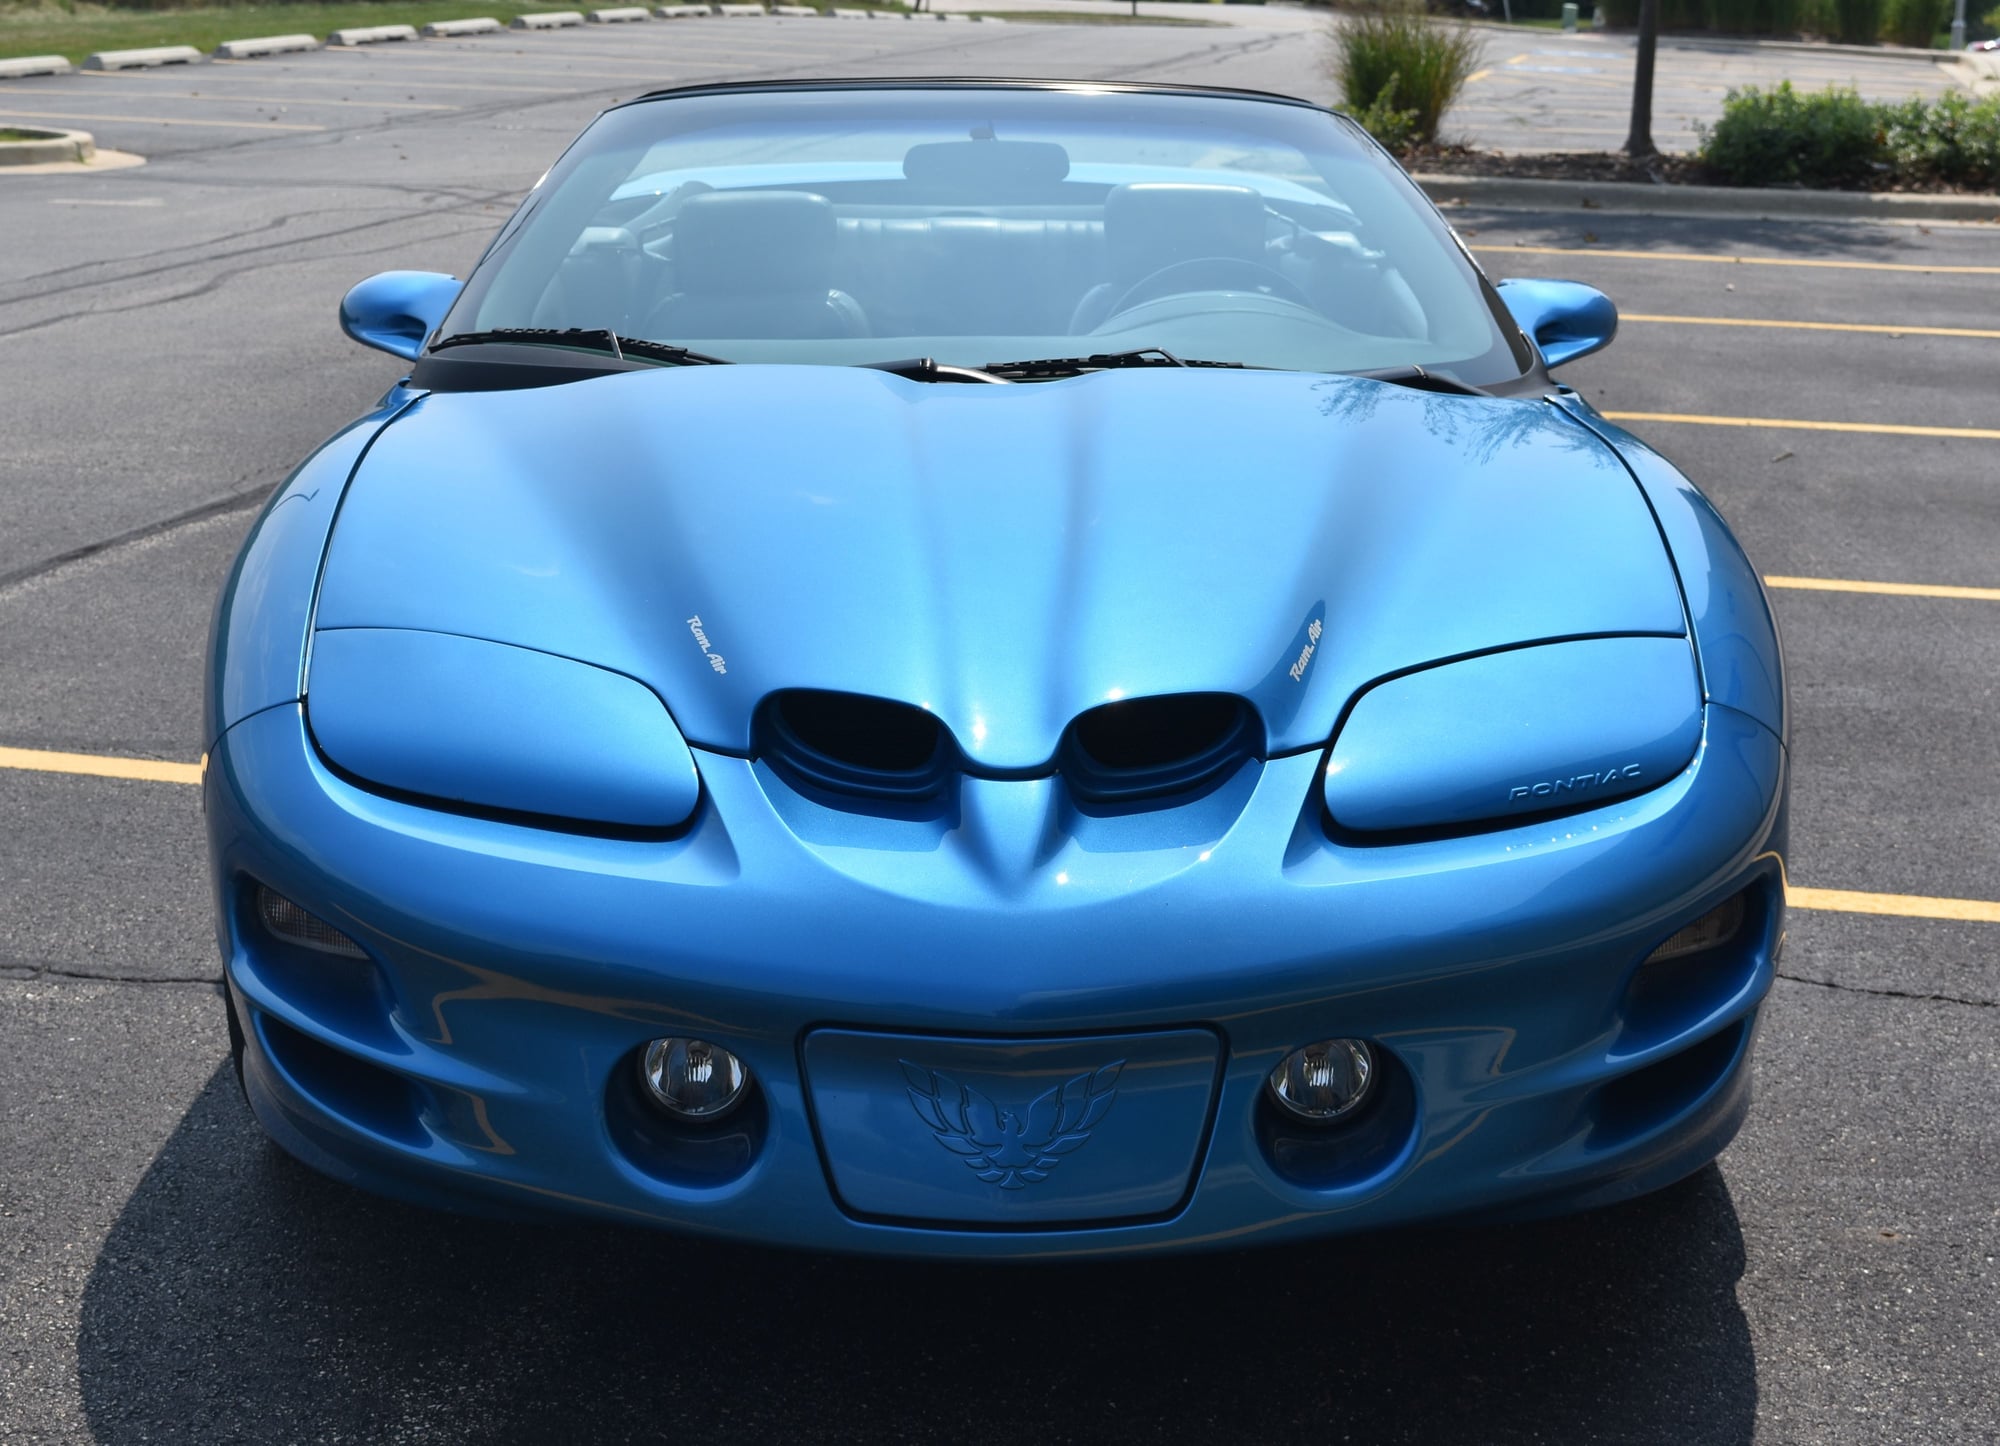 1999 Pontiac Firebird - 1999 Trans AM Convertible - Medium Blue Metallic 1 of 24 - Used - VIN 2G2FV32G0X2233154 - 90,500 Miles - 8 cyl - 2WD - Automatic - Convertible - Blue - Lake Zurich, IL 60047, United States